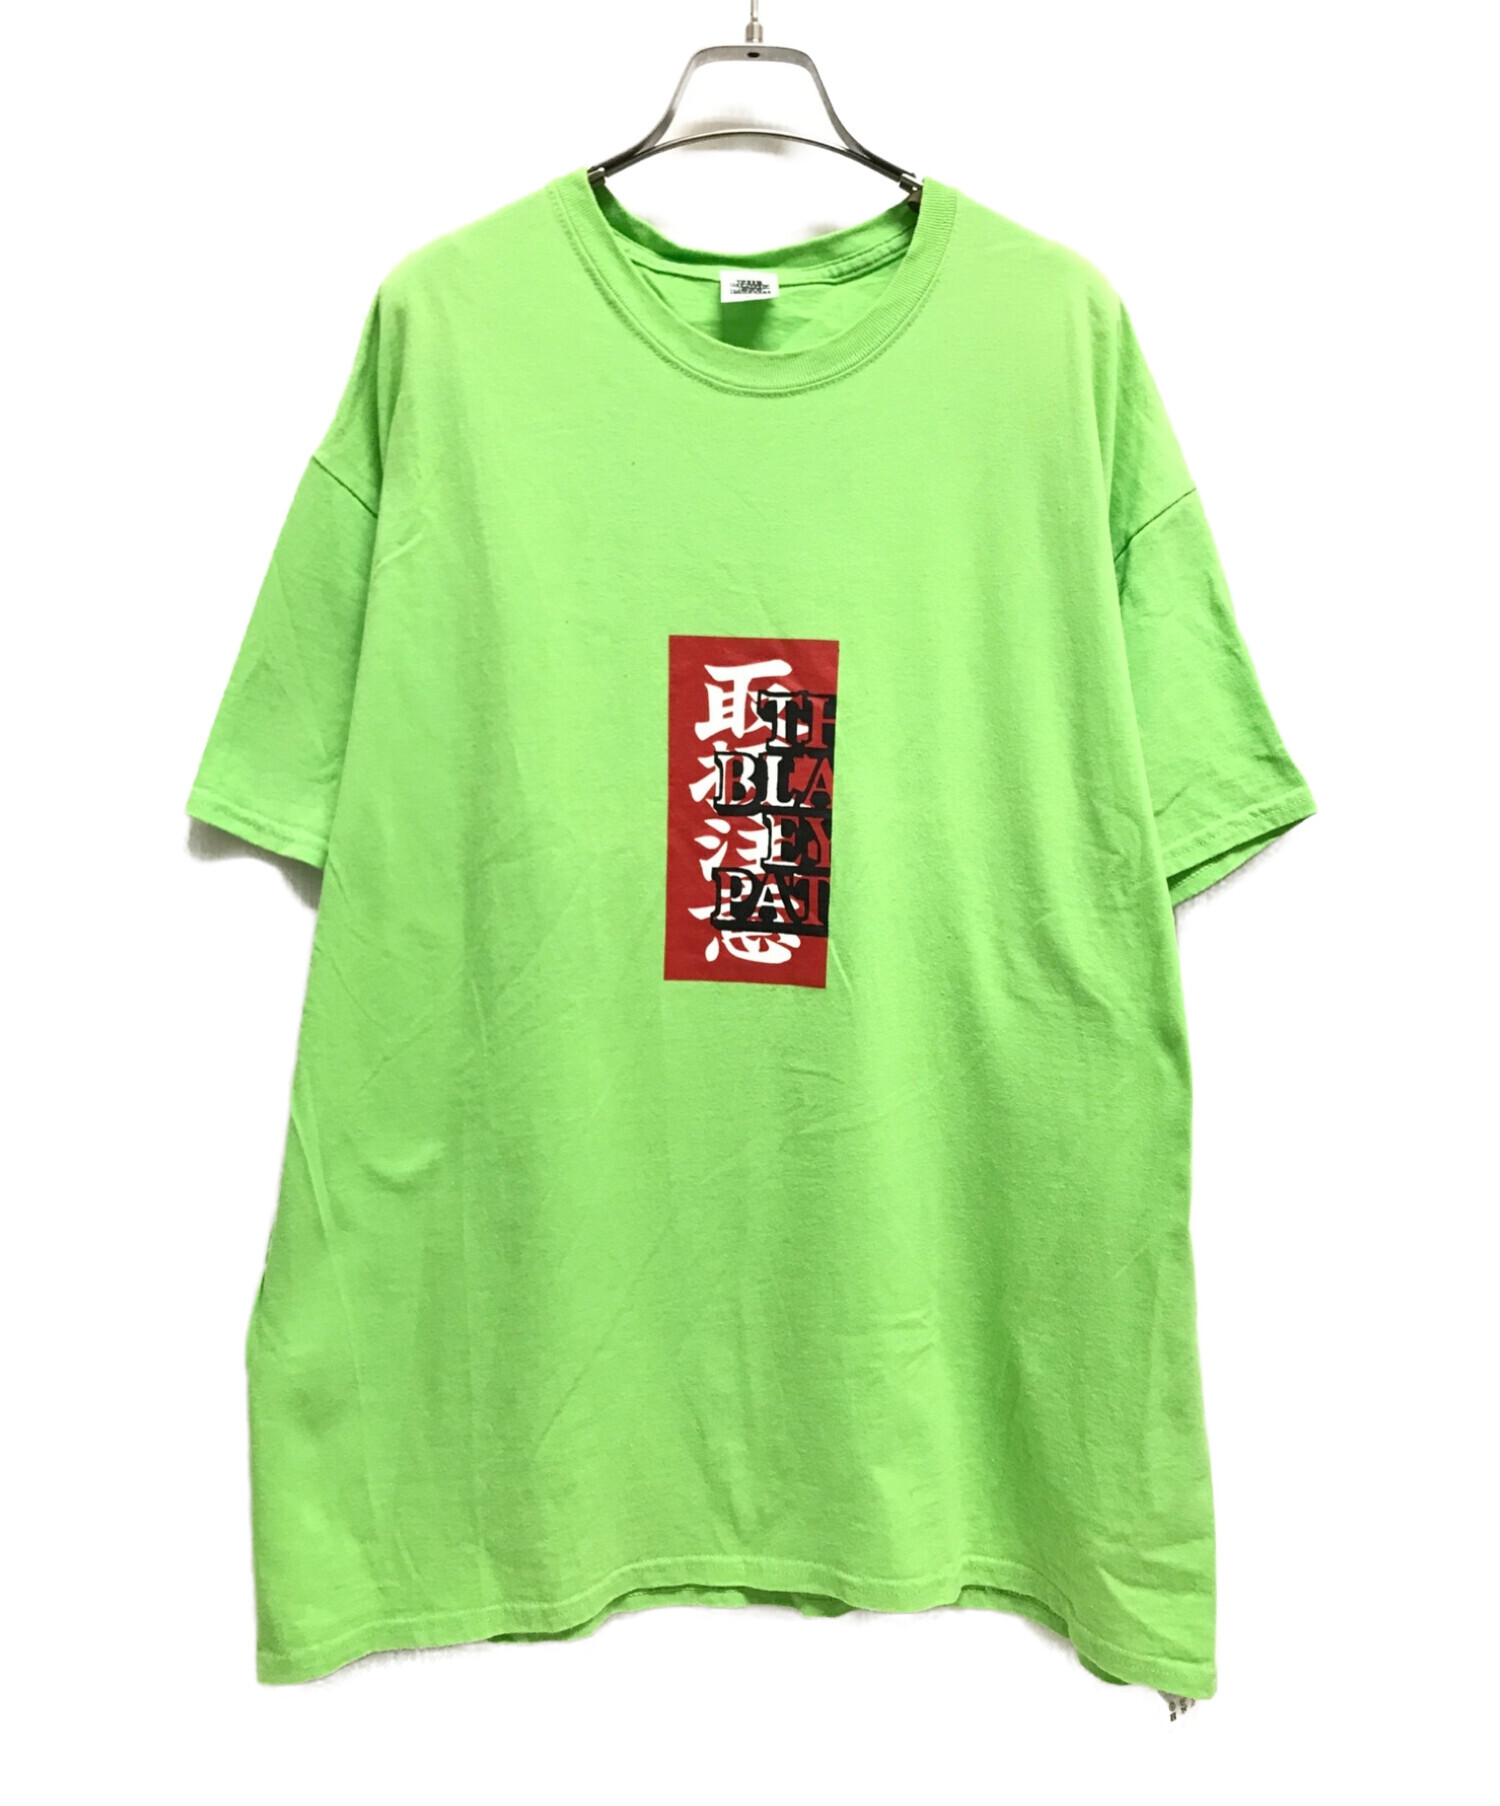 BlackEyePatch ブラックアイパッチ ロゴ Tシャツ M グリーン - Tシャツ